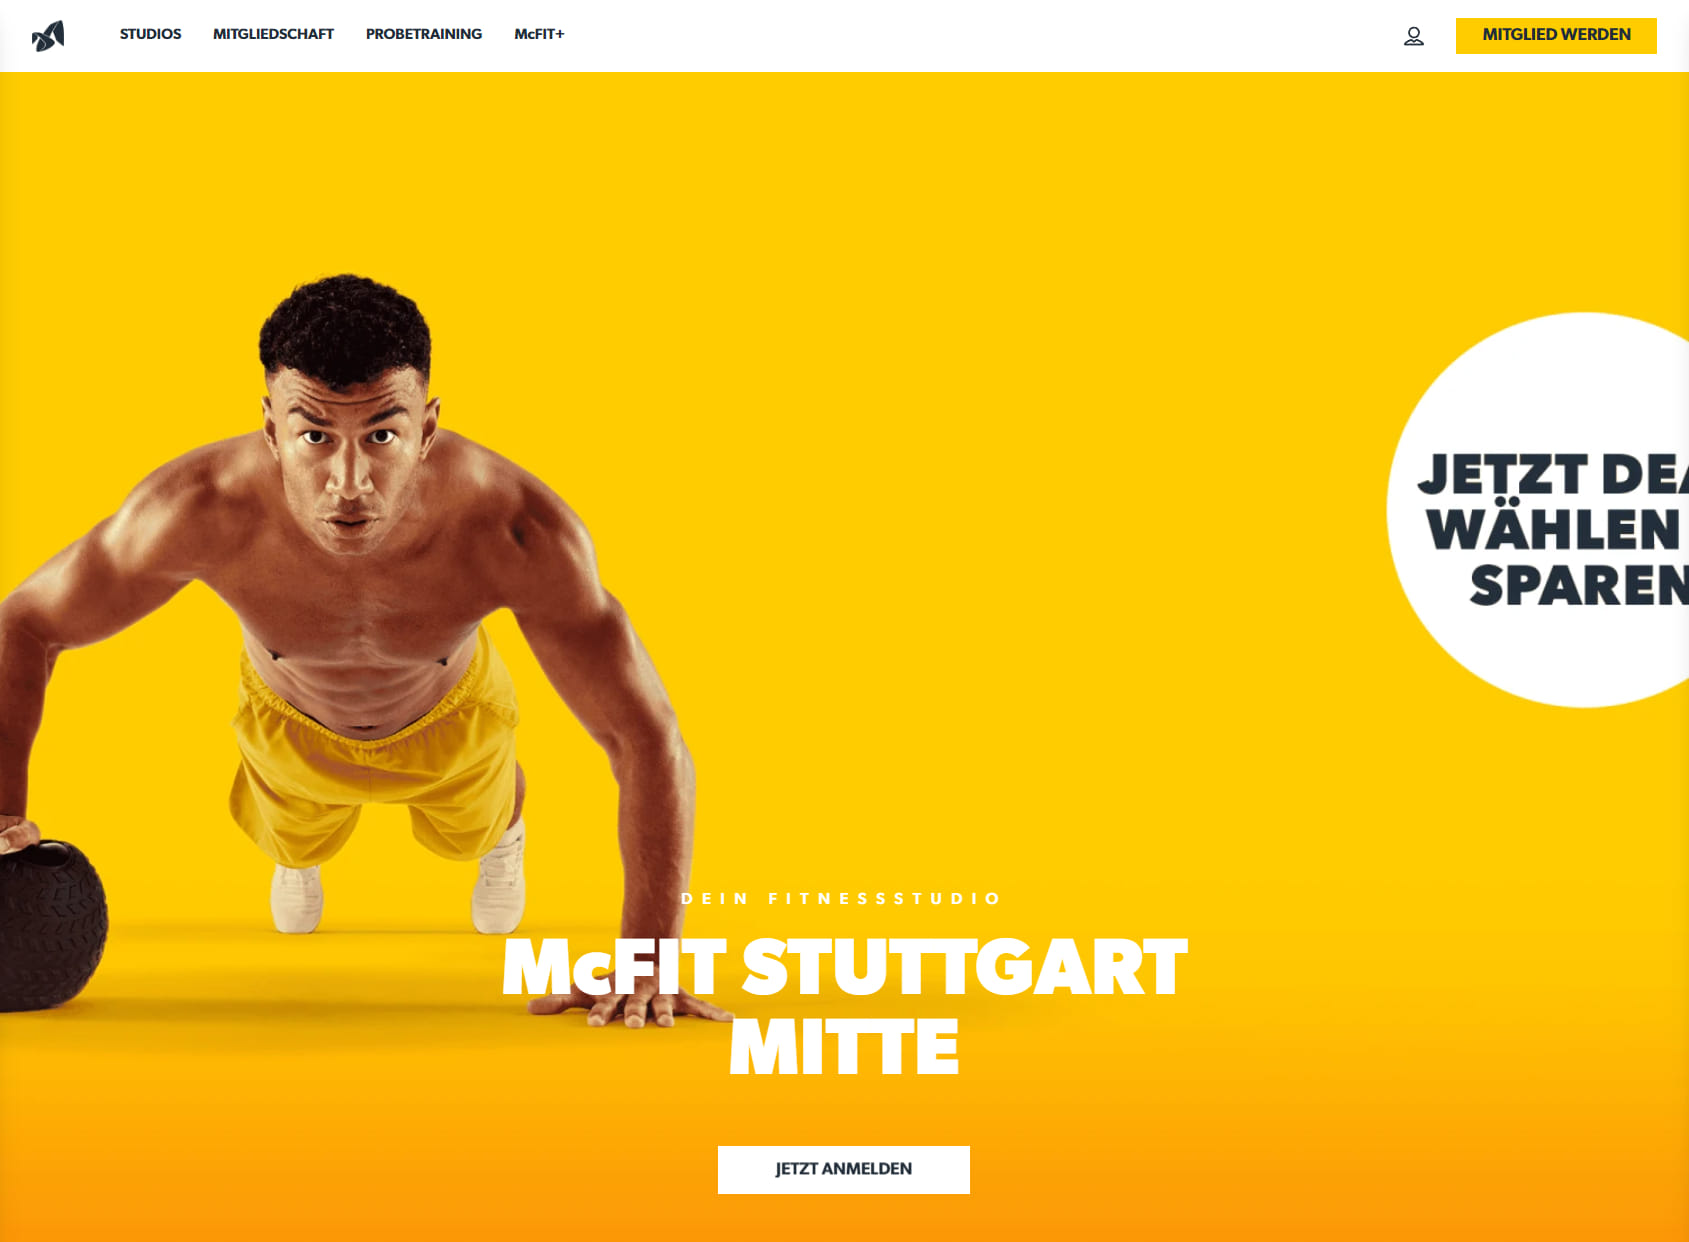 McFIT Fitnessstudio Stuttgart Mitte